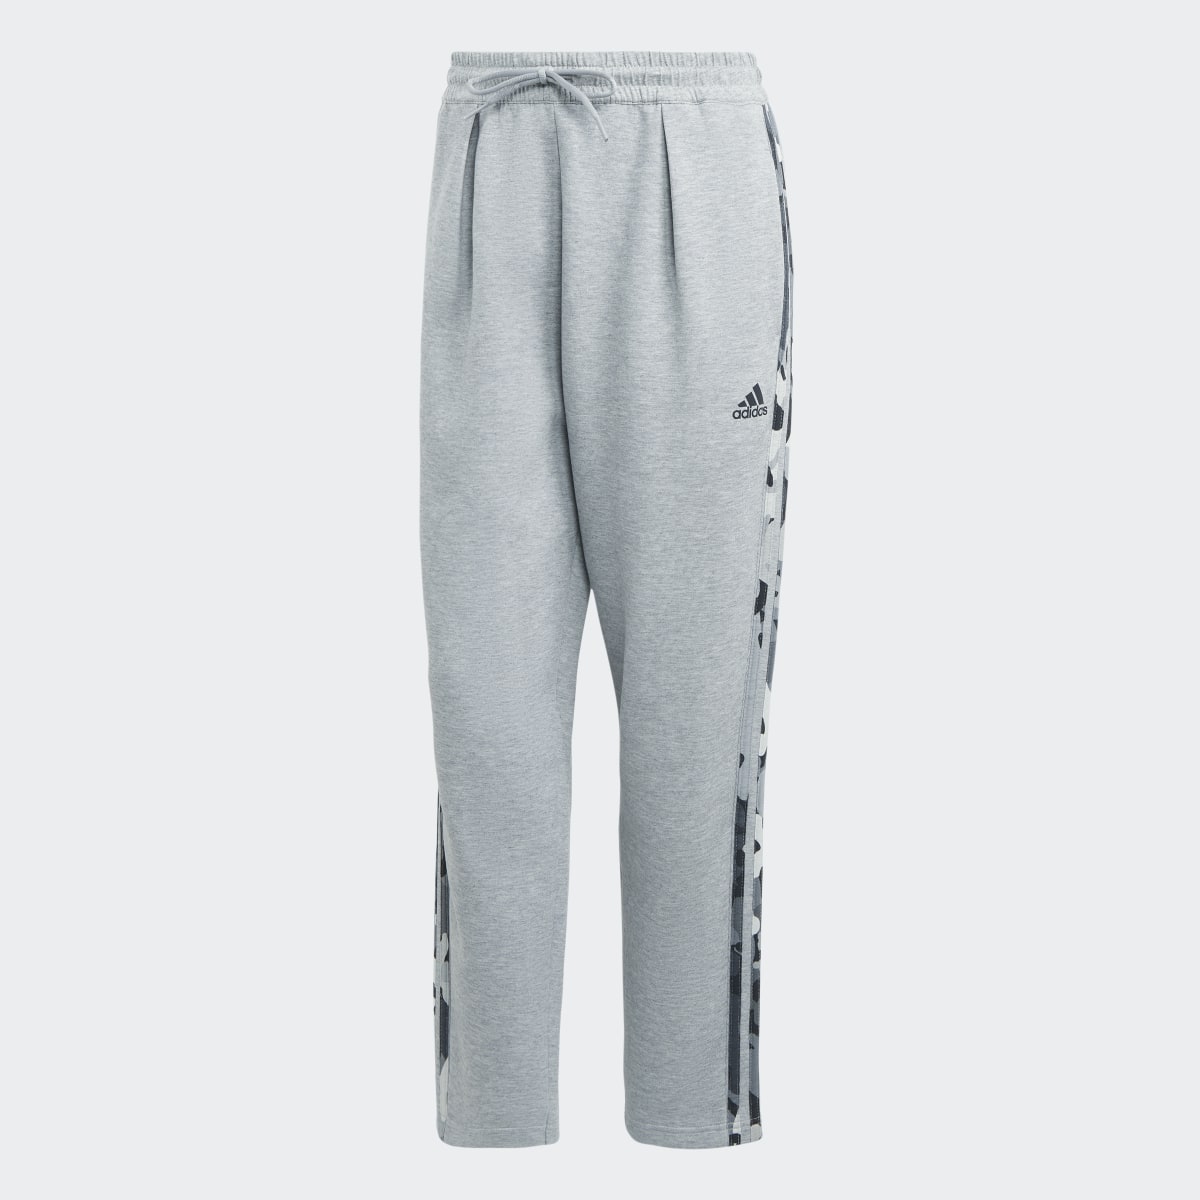 Adidas Graphic Pants. 4